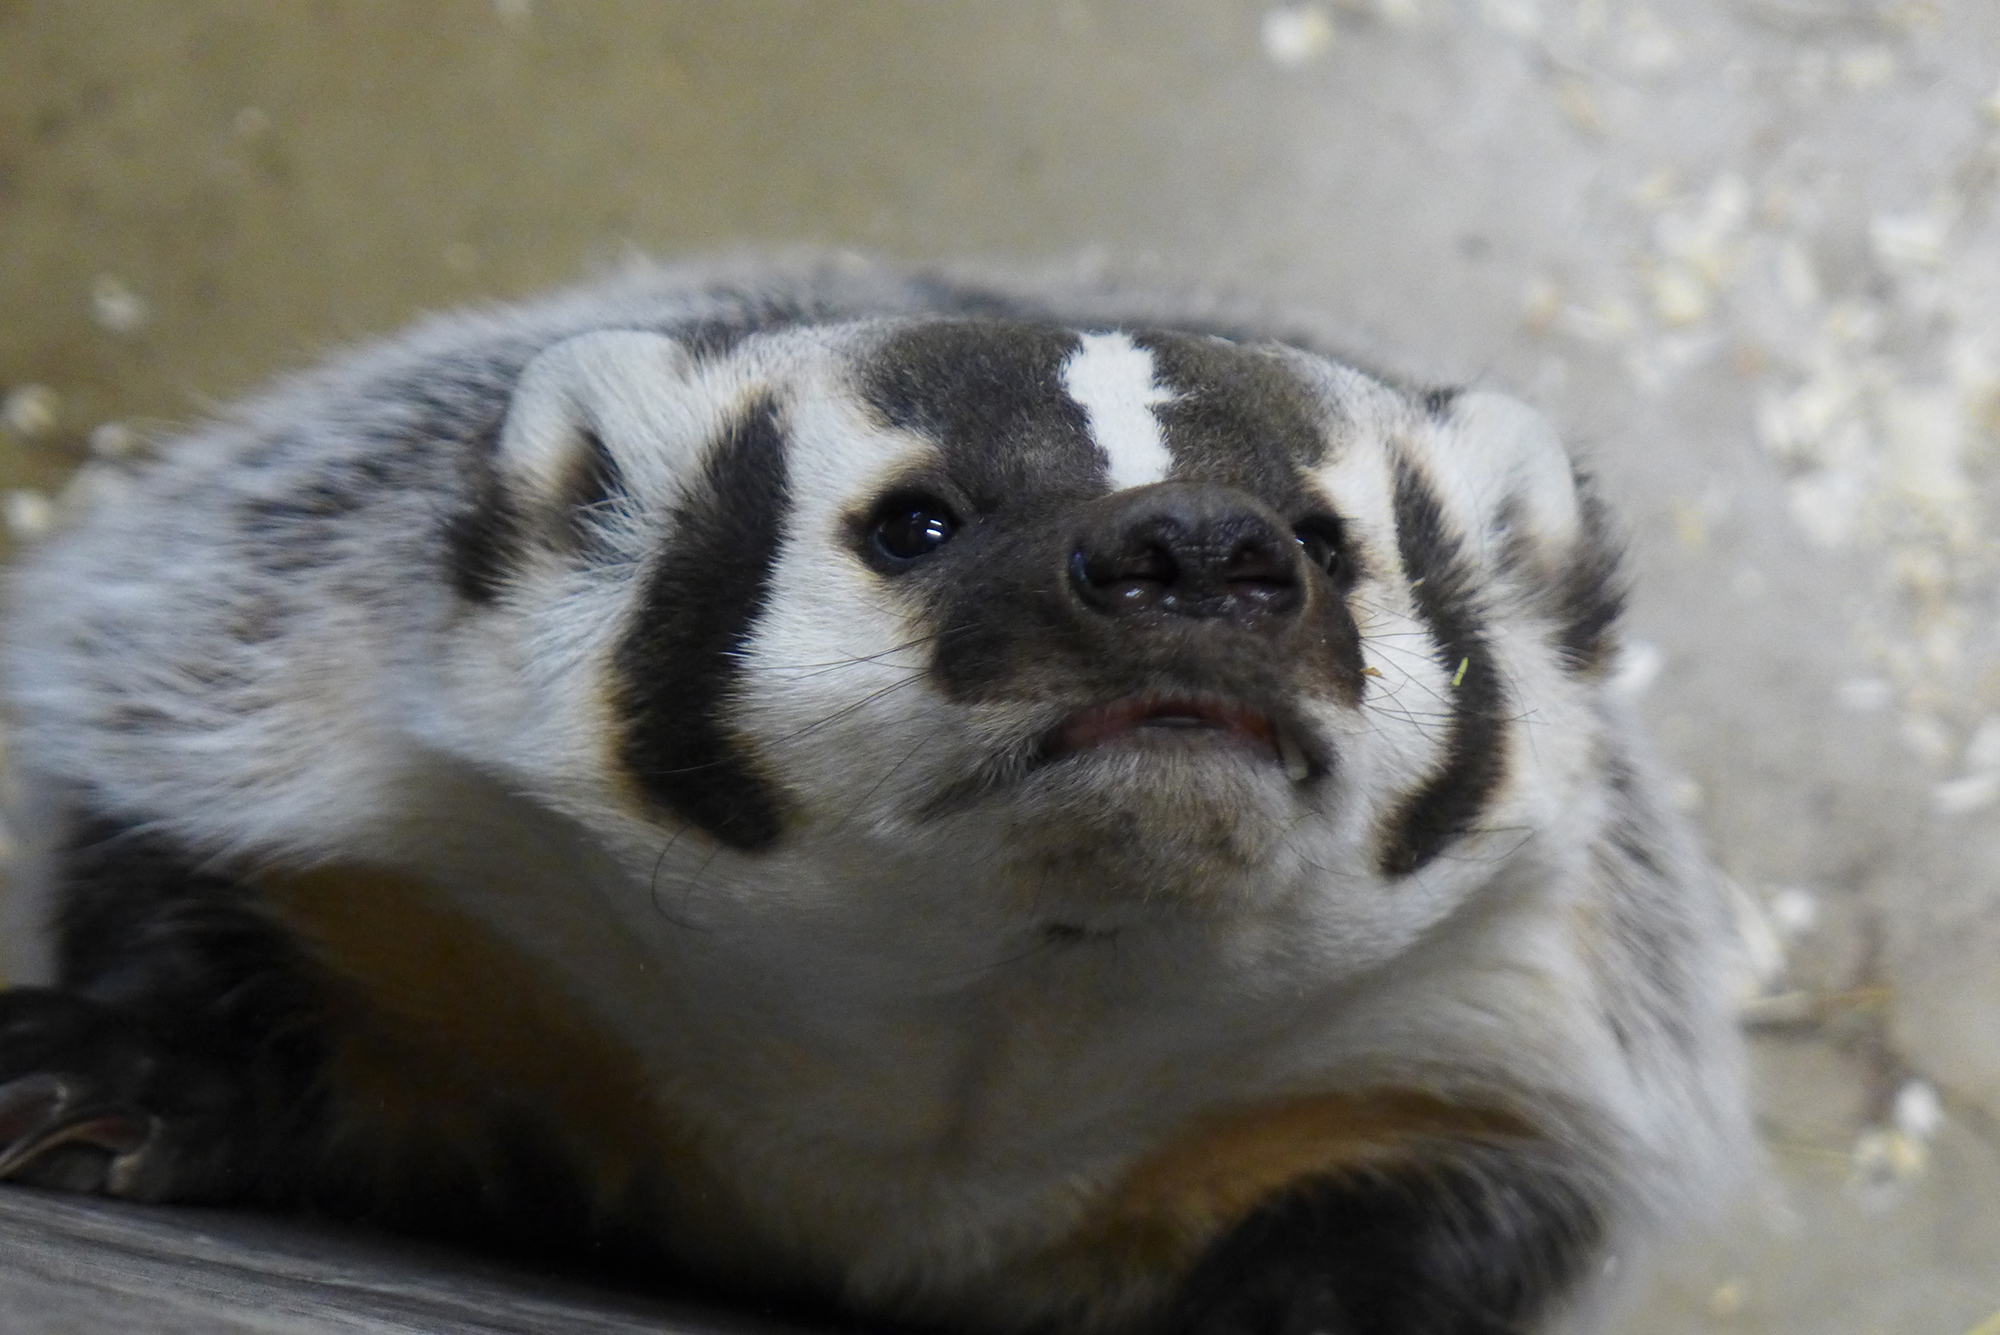 Badger close-up